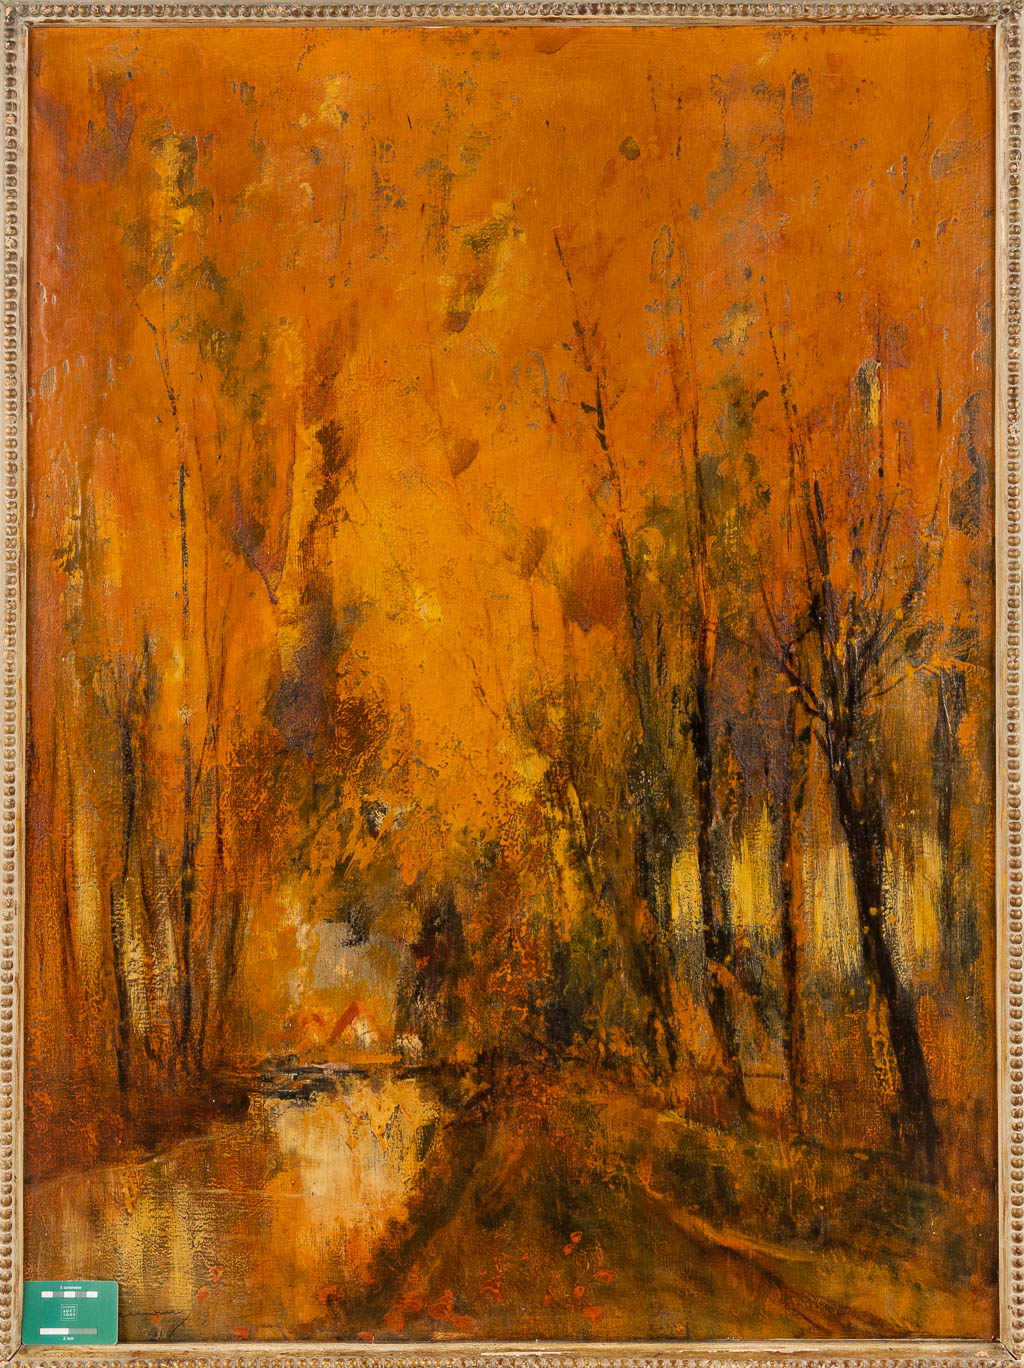 Paul HAGEMANS (1884-1959) 'Summer' oil on board. (W:87 x H:118 cm)